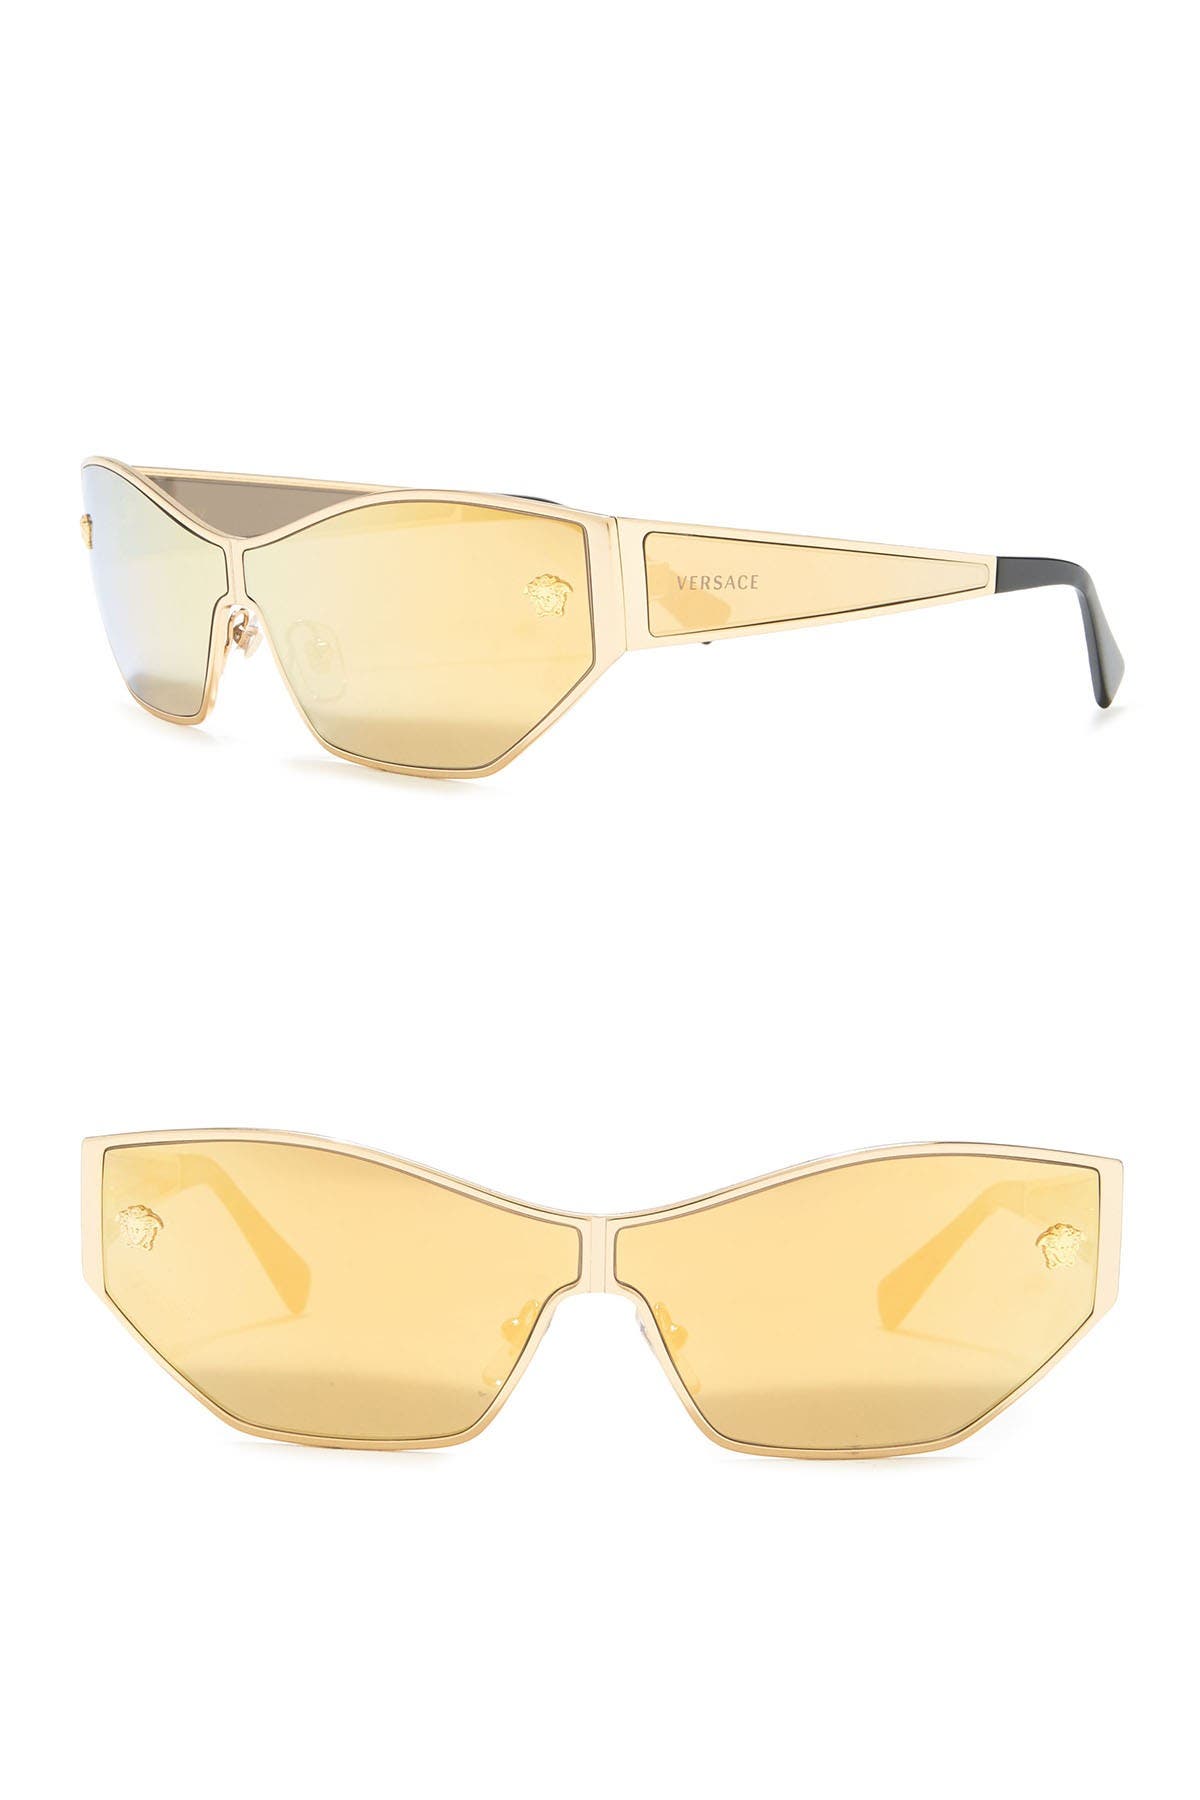 nordstrom versace sunglasses